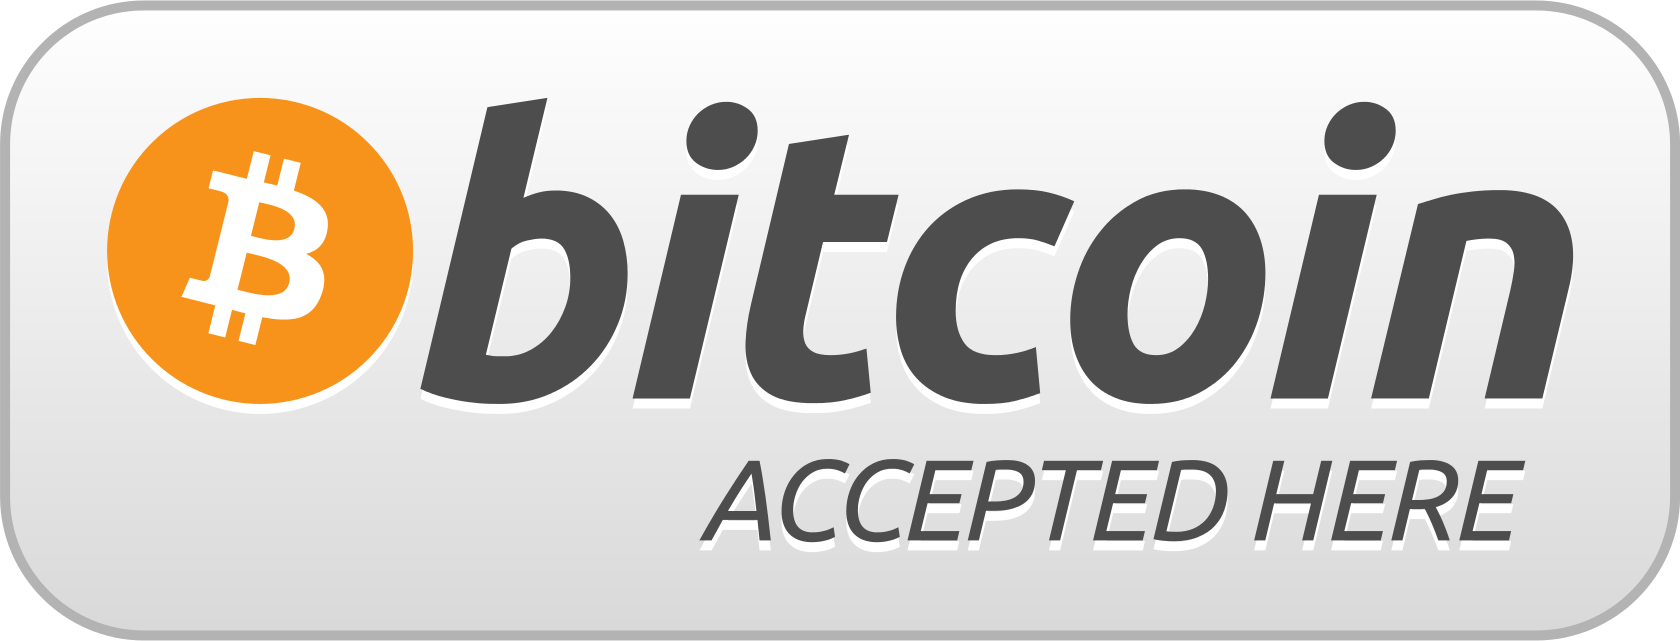 Bitcoin Logo - Promotional graphics - Bitcoin Wiki